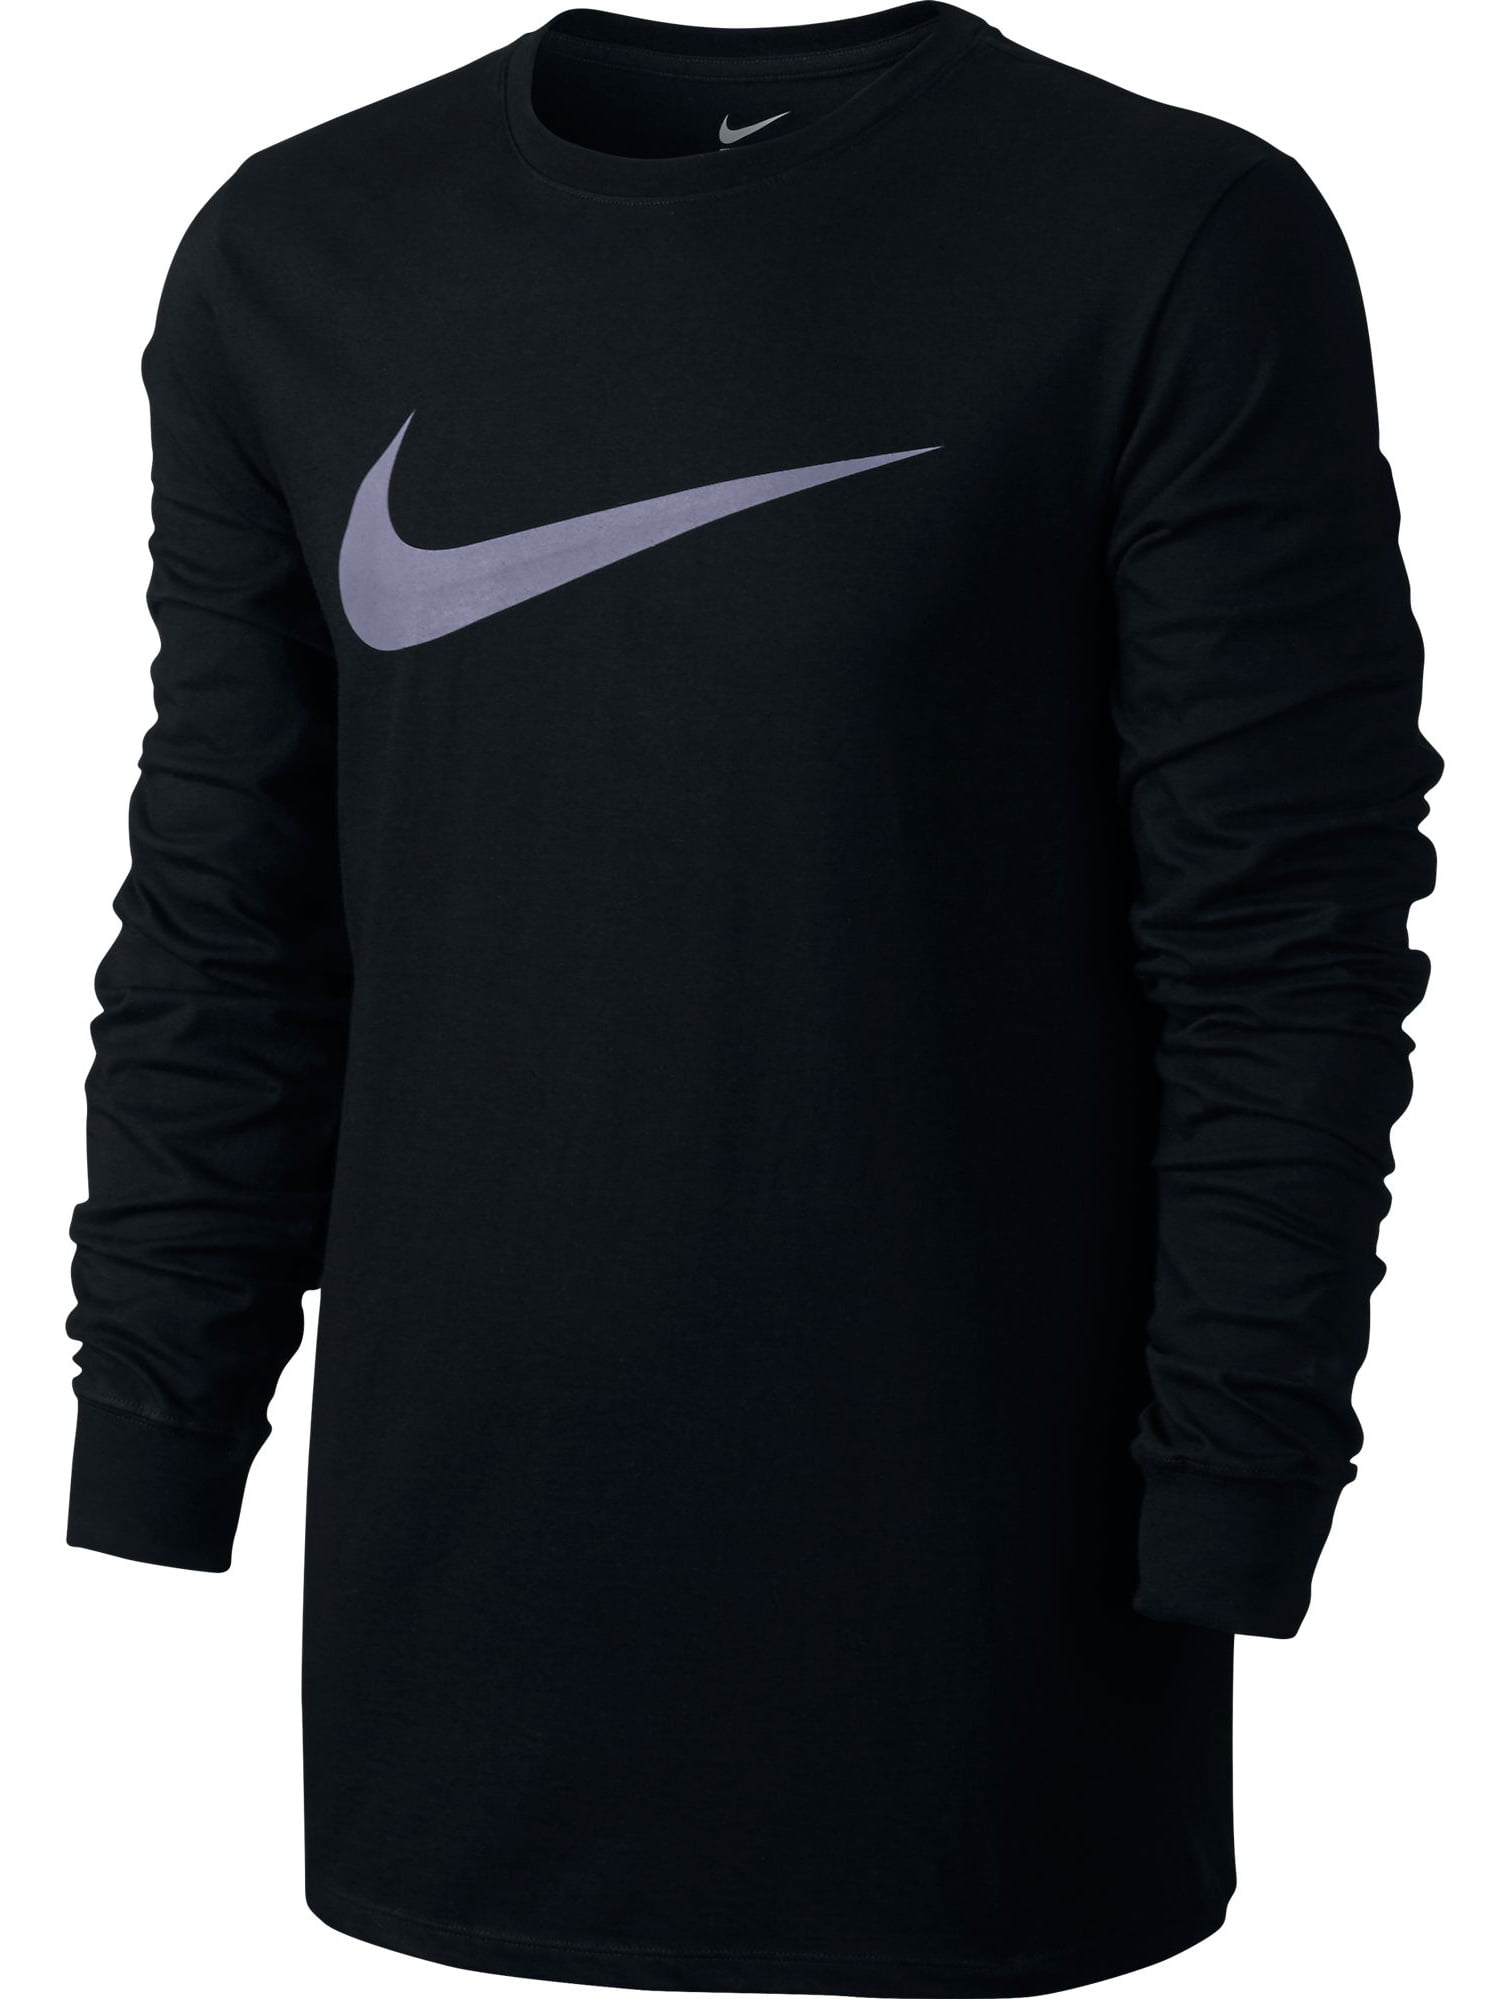 Icon Swoosh Long Sleeve Men's T-shirt Black/Grey 709491-010 - Walmart.com